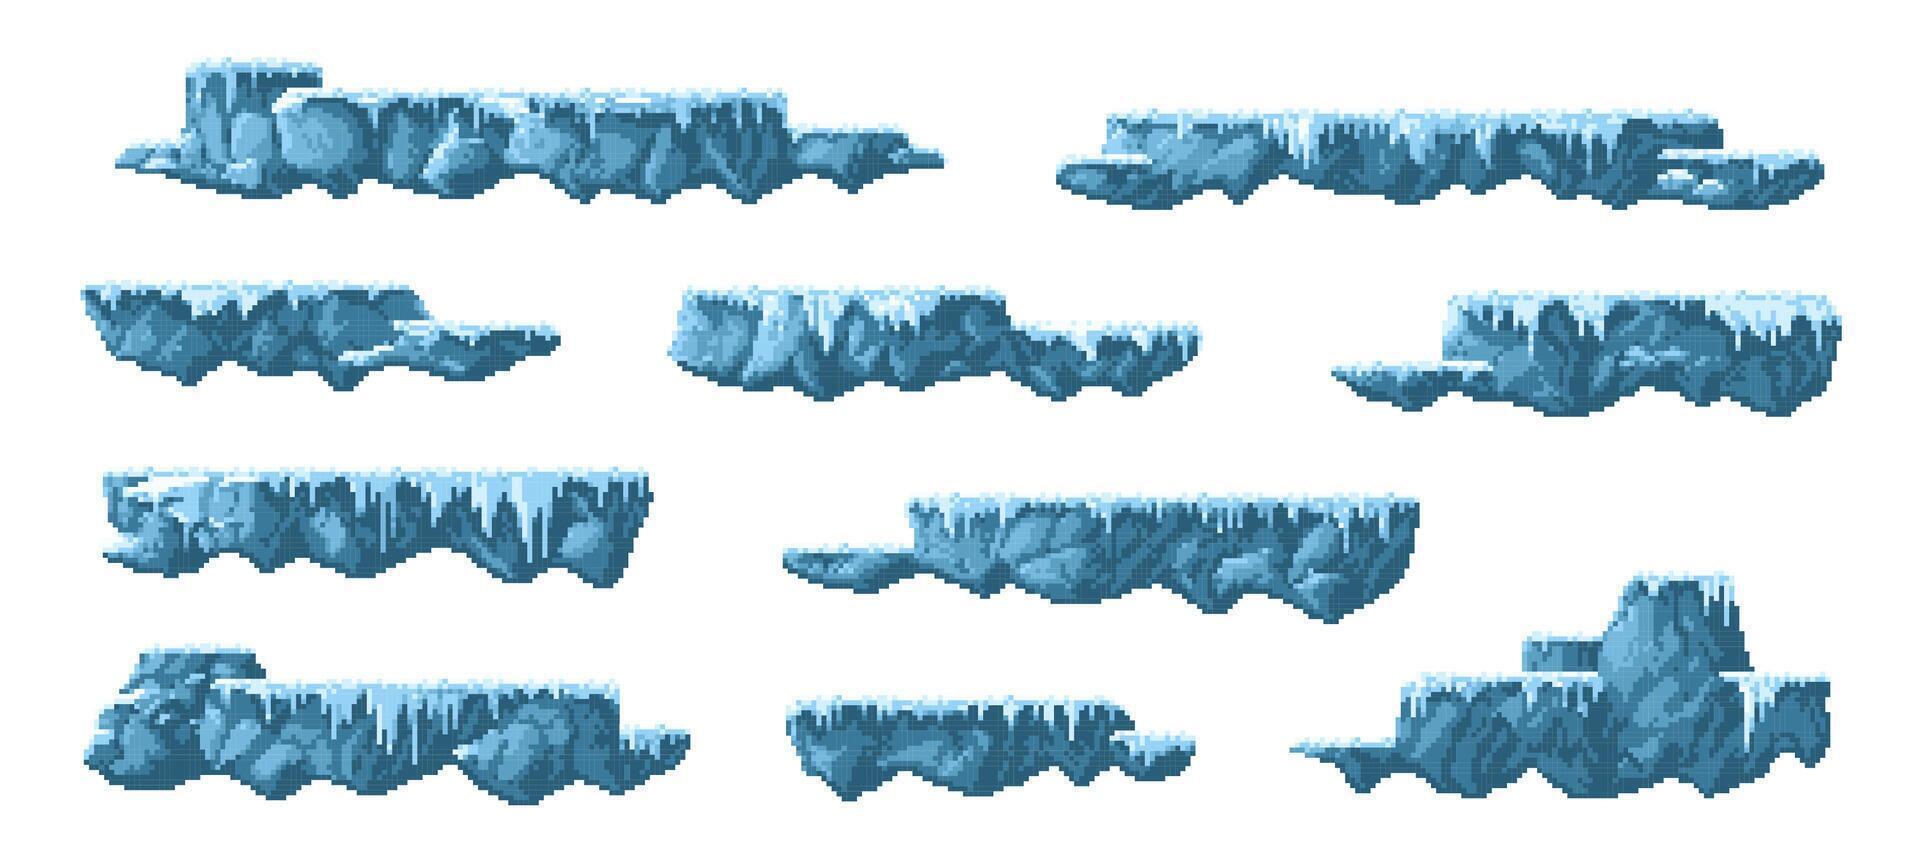 8bit arcade pixel art game ice and snow platforms vector